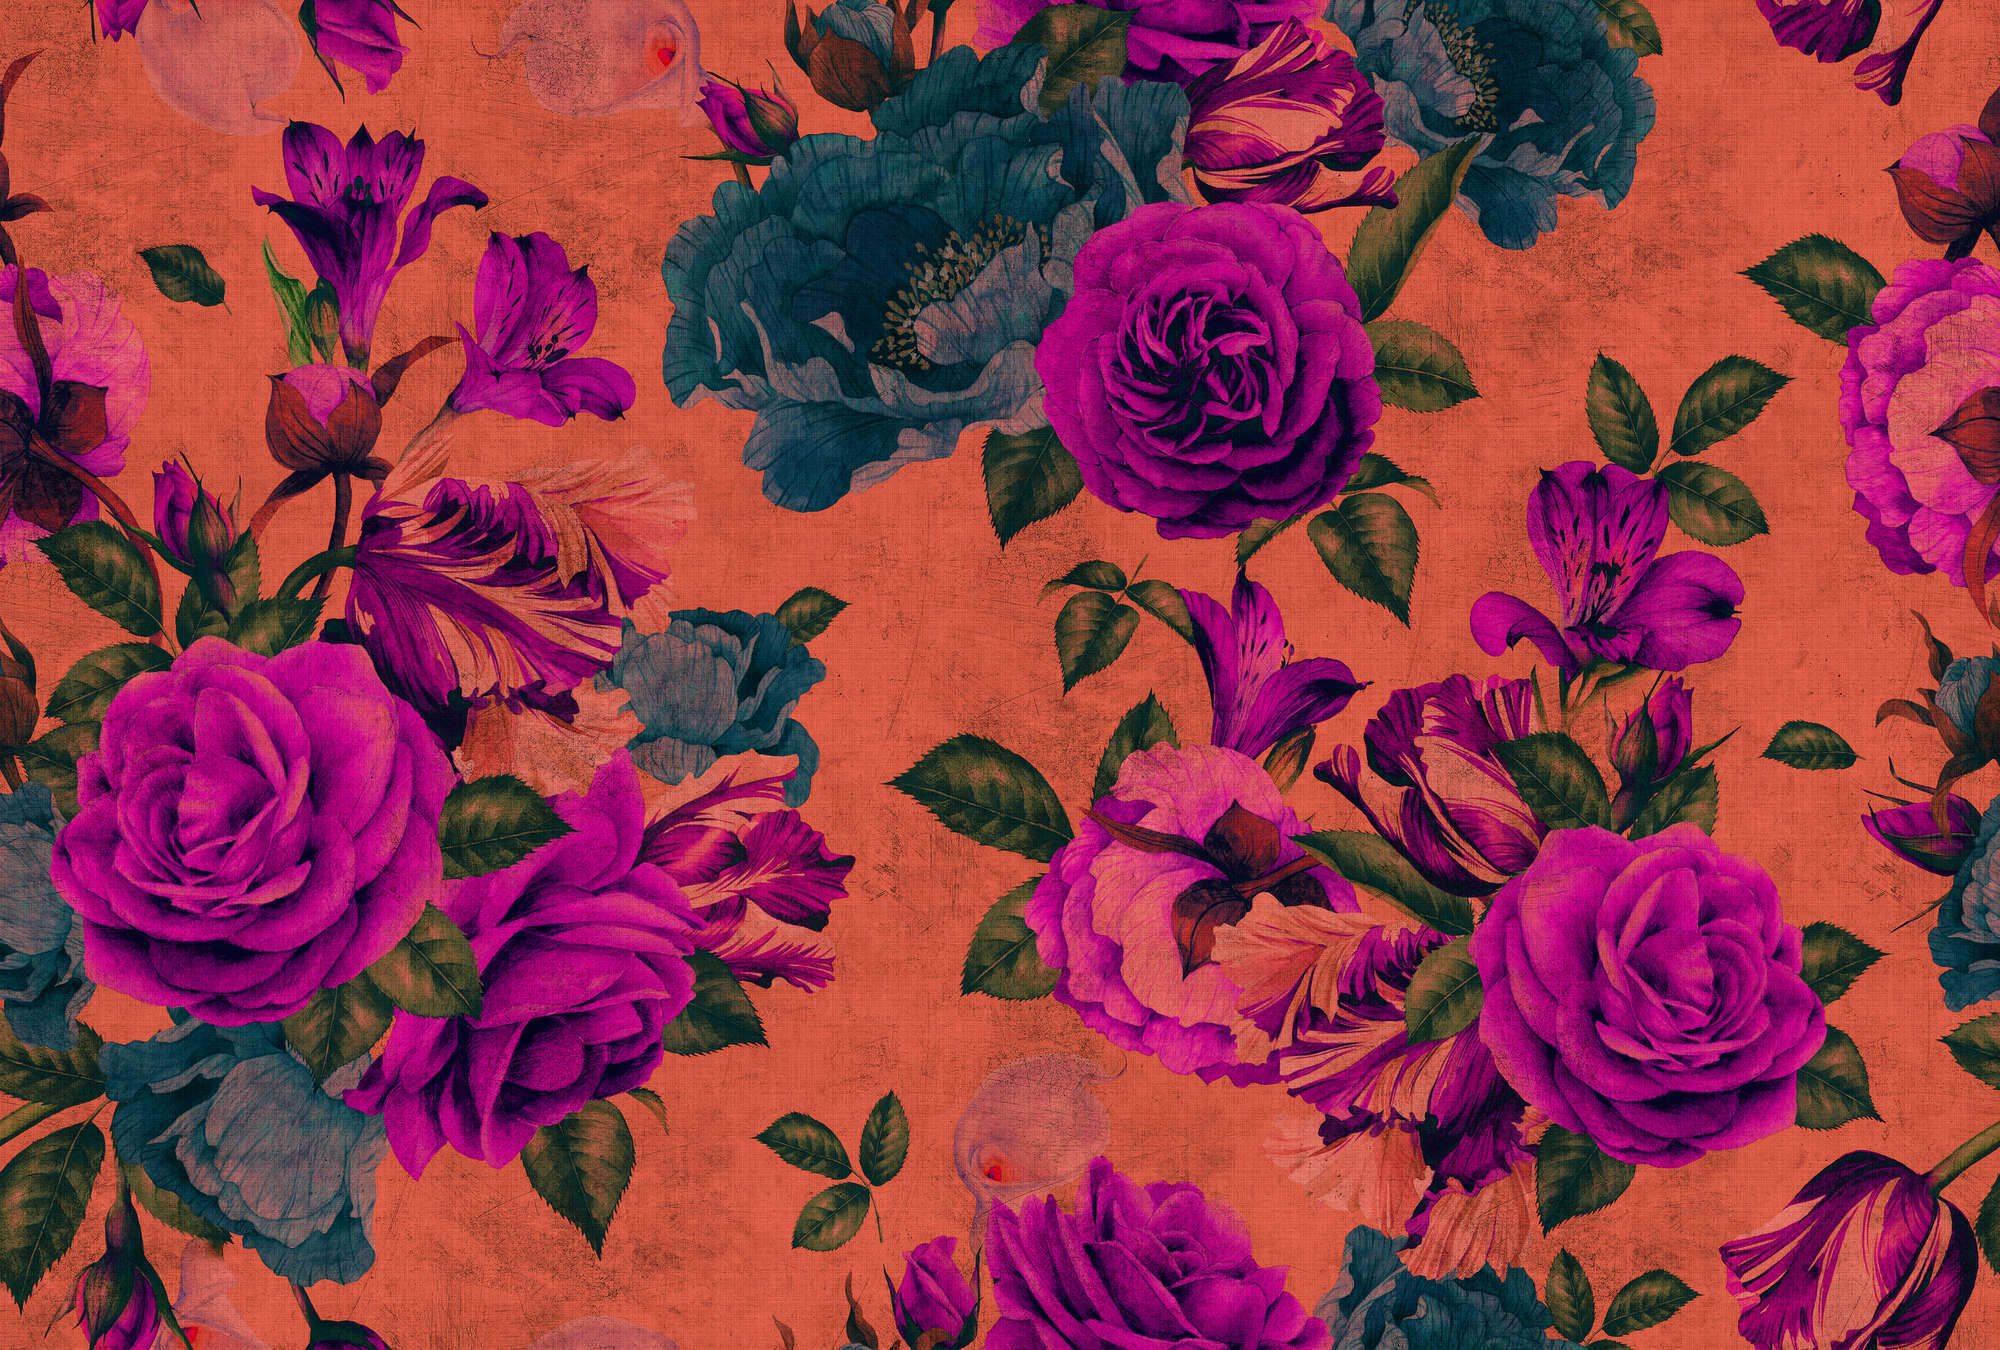             Spanish rose 2 - rose petal wallpaper, natural structure with bright colours - Orange, Violet | Matt smooth fleece
        